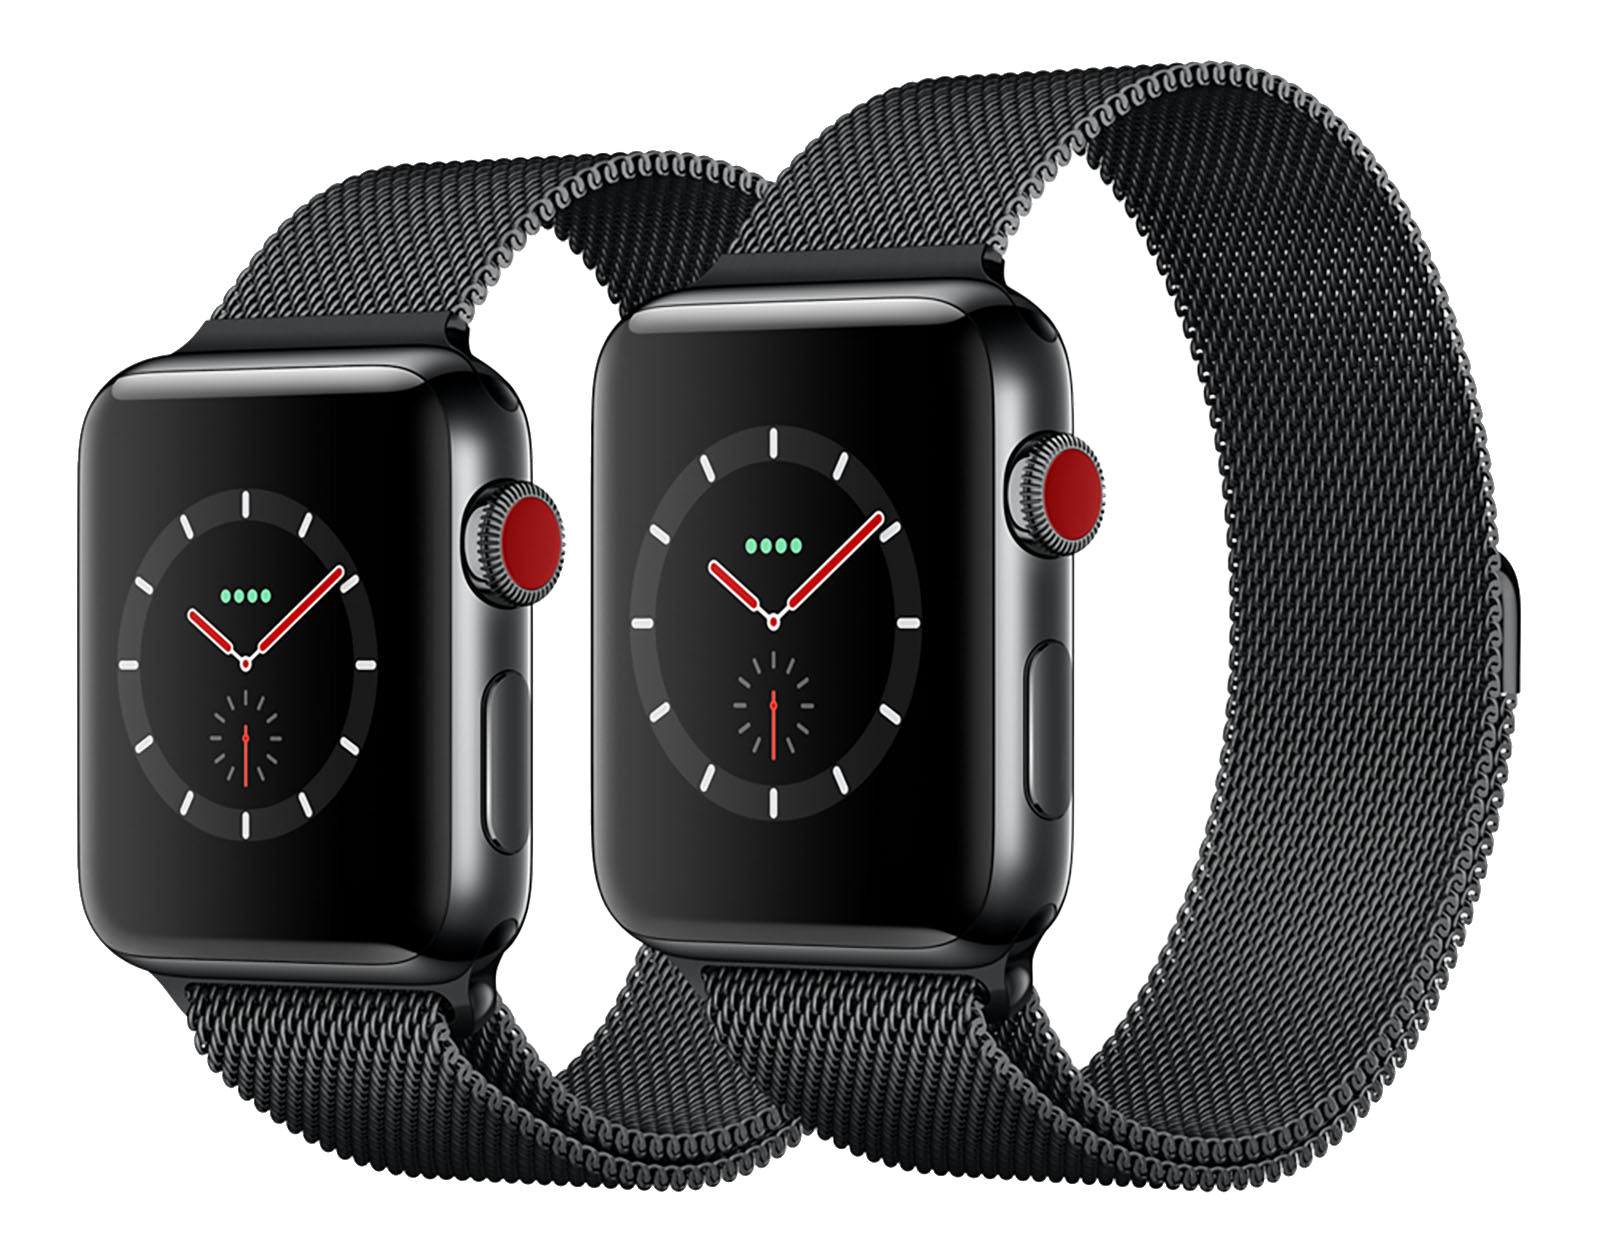 Best Apple Watch Series 3 MQJV2LL/A deals on GPS plus cellular models